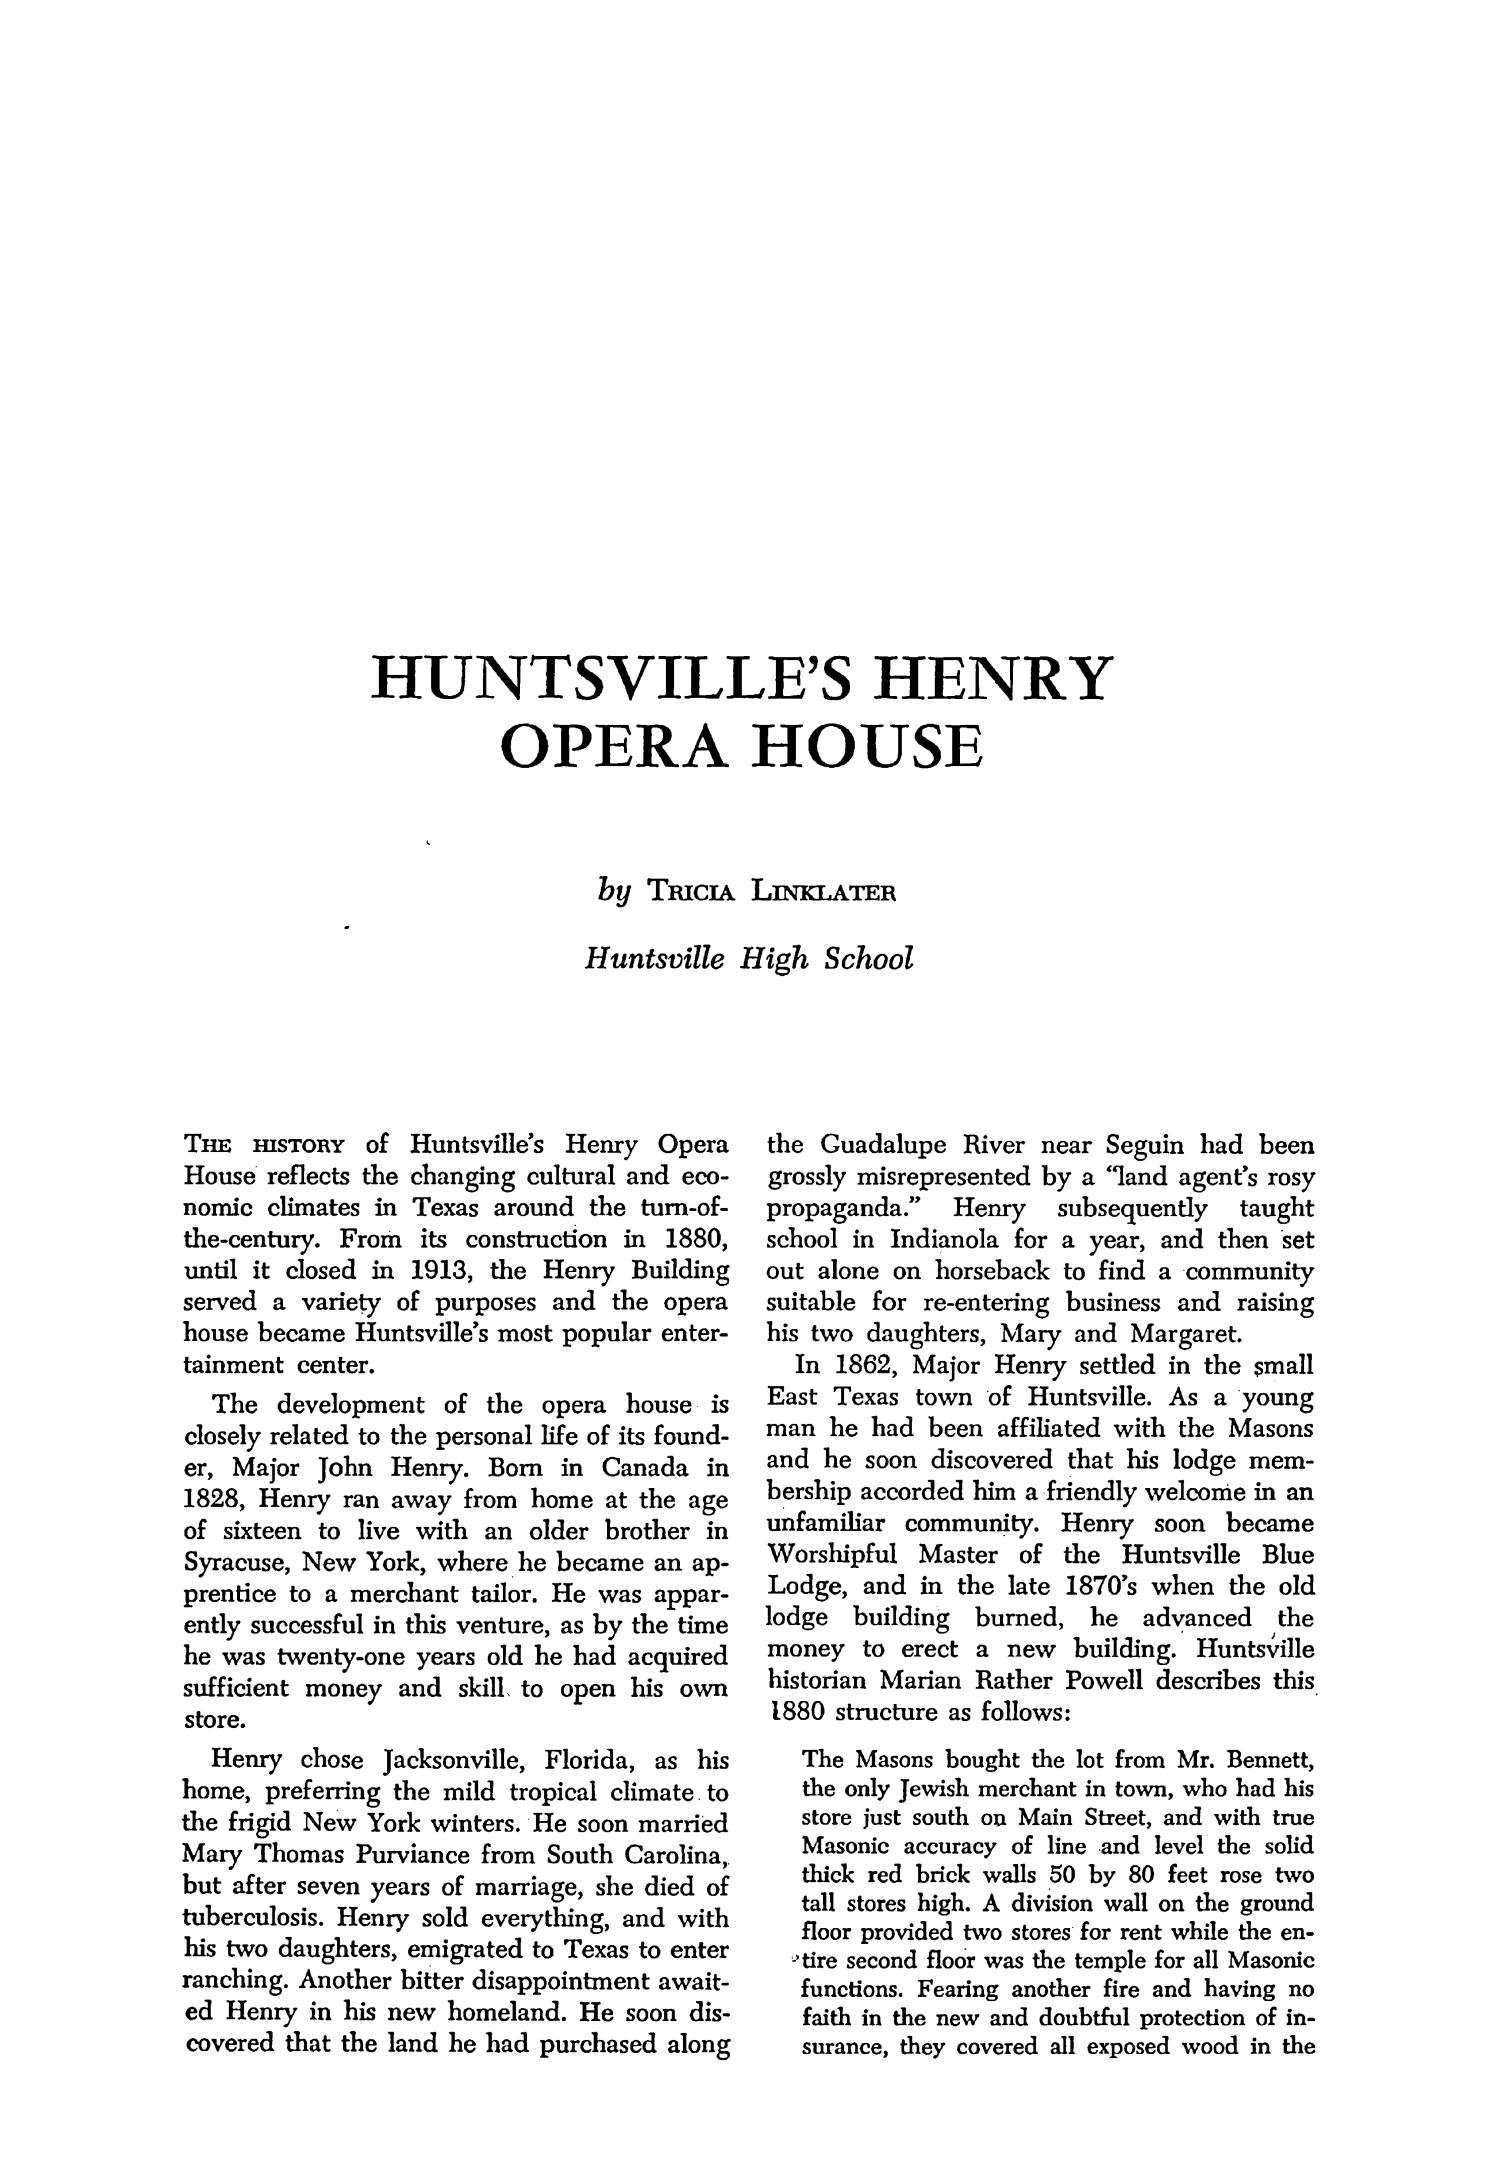 The Texas Historian, Volume 37, Number 2, November 1976
                                                
                                                    1
                                                